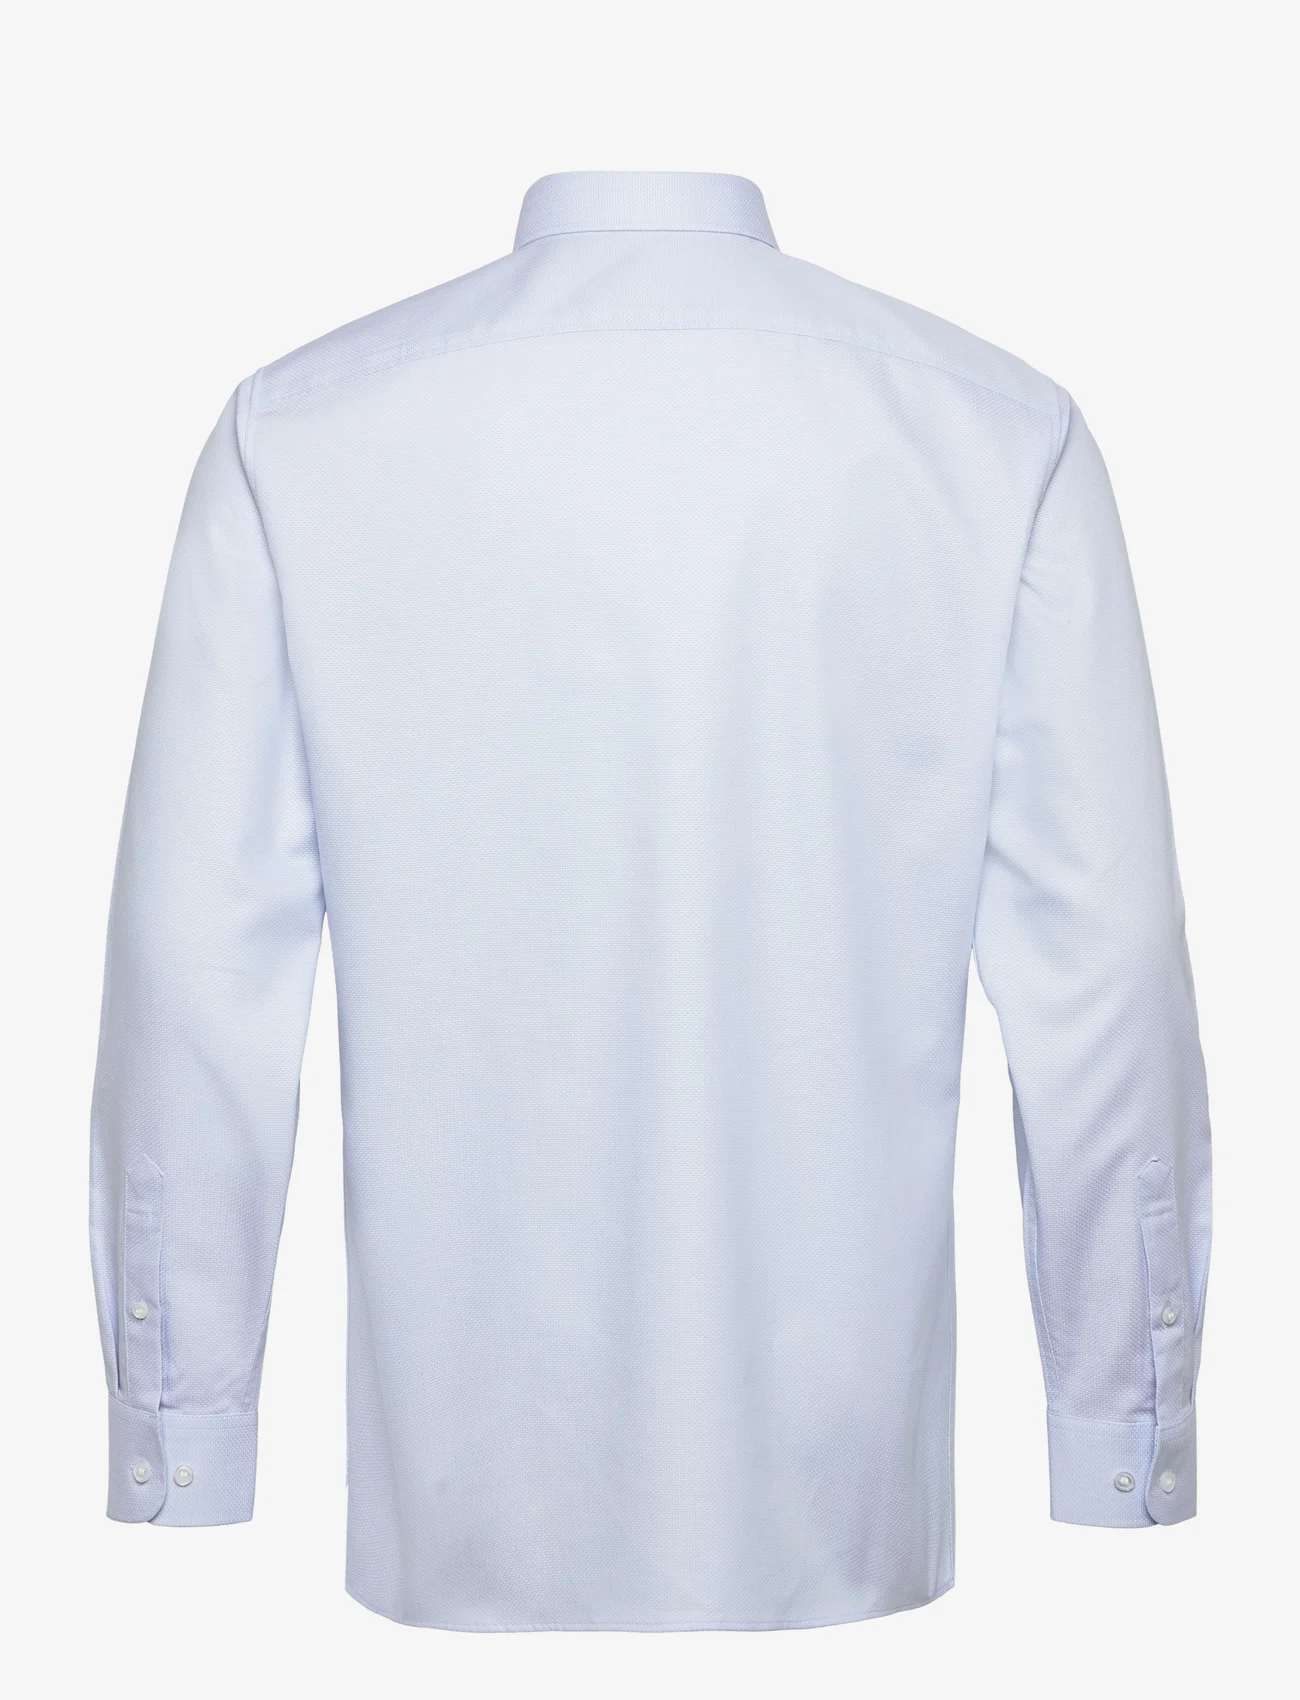 Selected Homme - SLHSLIMNATHAN-SOLID SHIRT LS B - podstawowe koszulki - light blue - 1